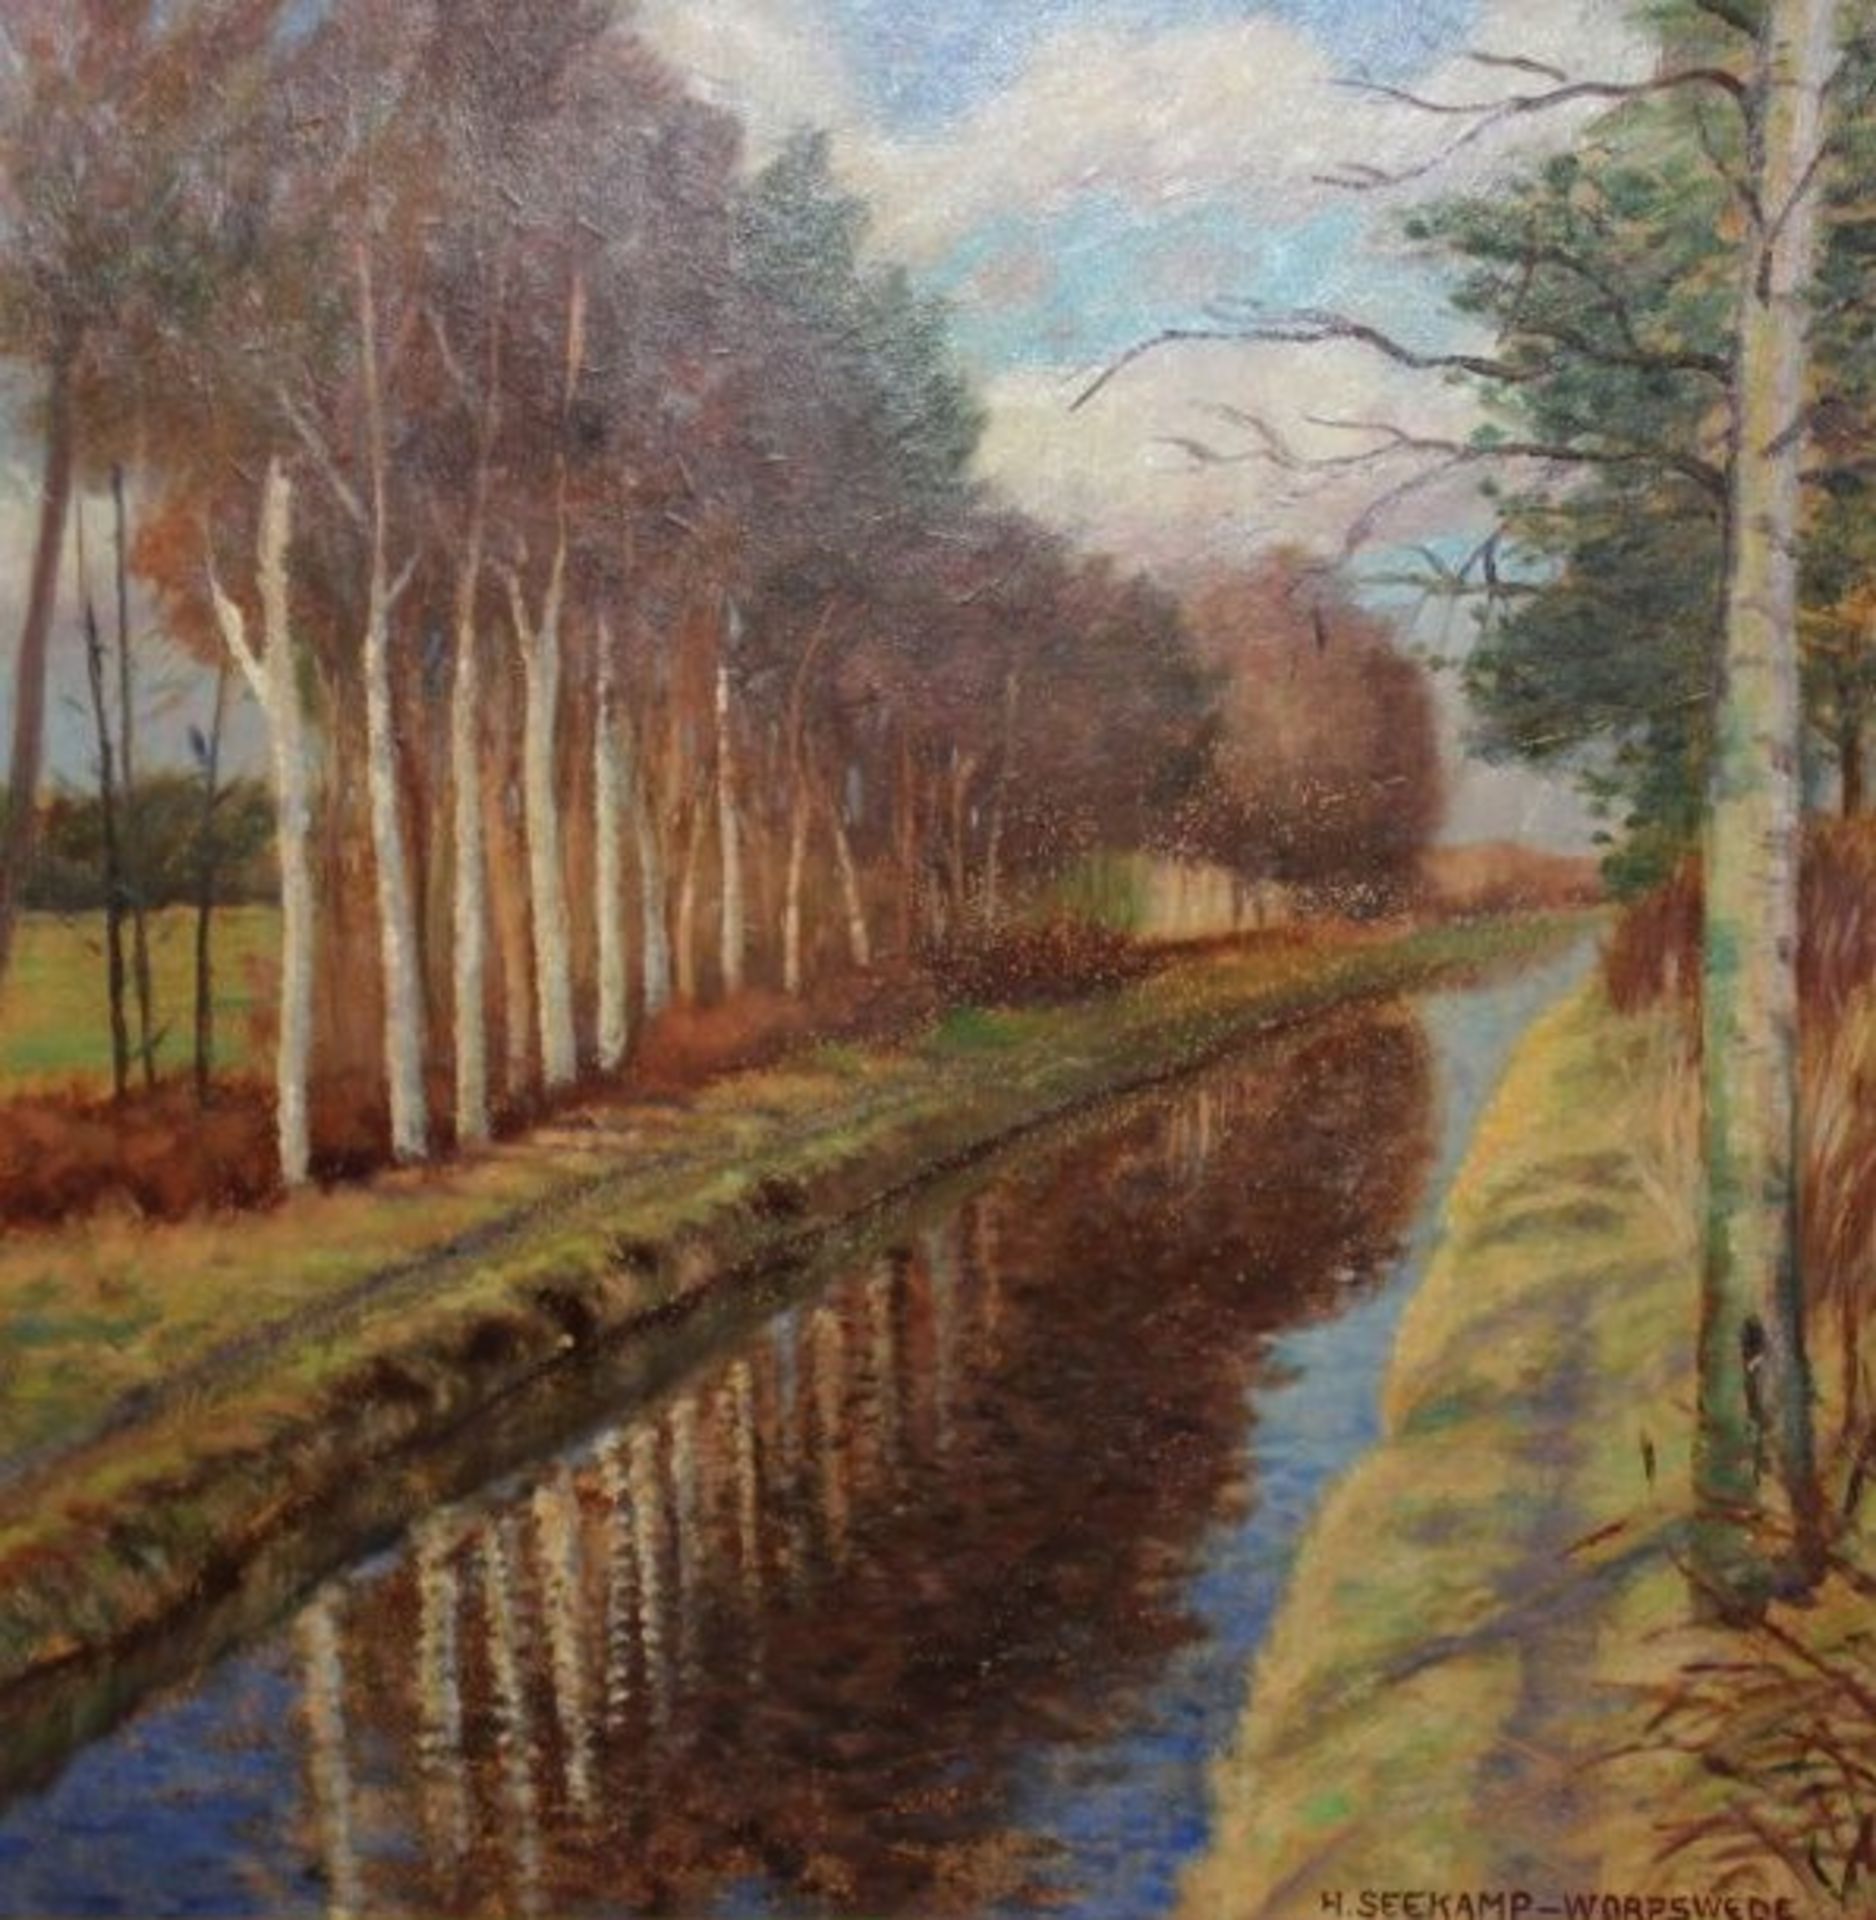 Hermann SEEKAMP (1881-1936), Worpswede, "Birken am Fluss", Öl/Hartfaser, restaurierungs bedürftig,